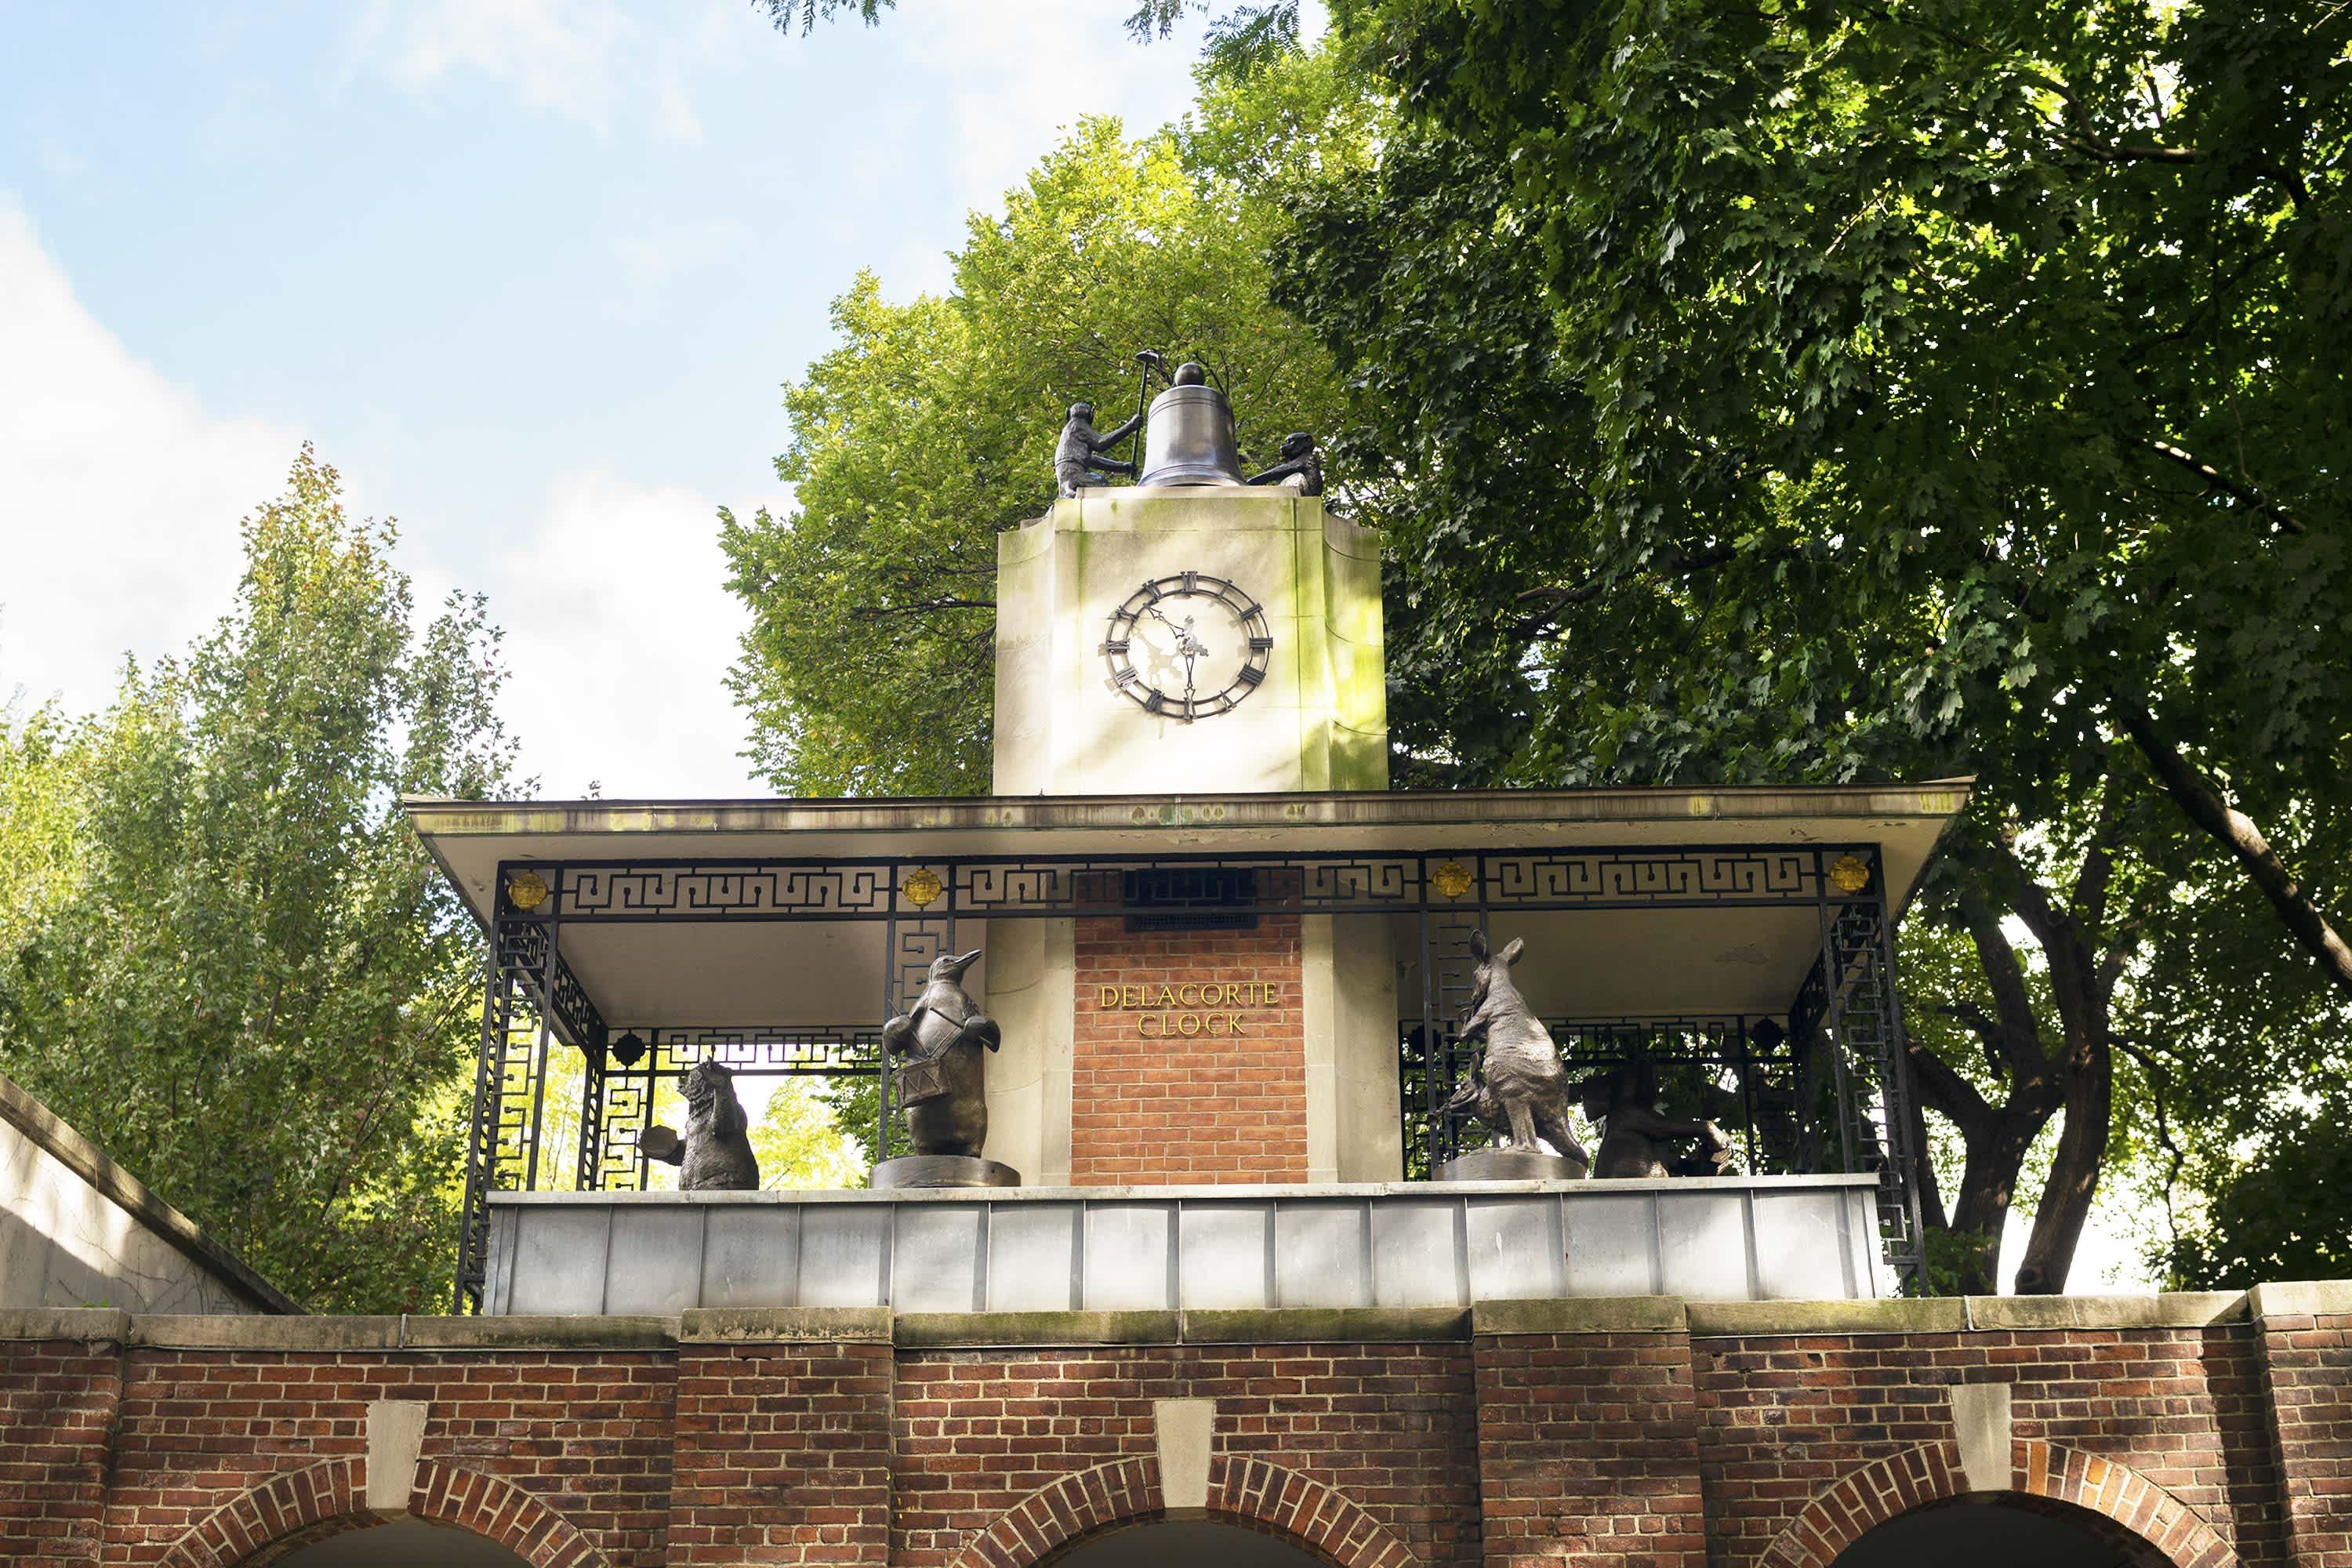 Delacorte clock, central park